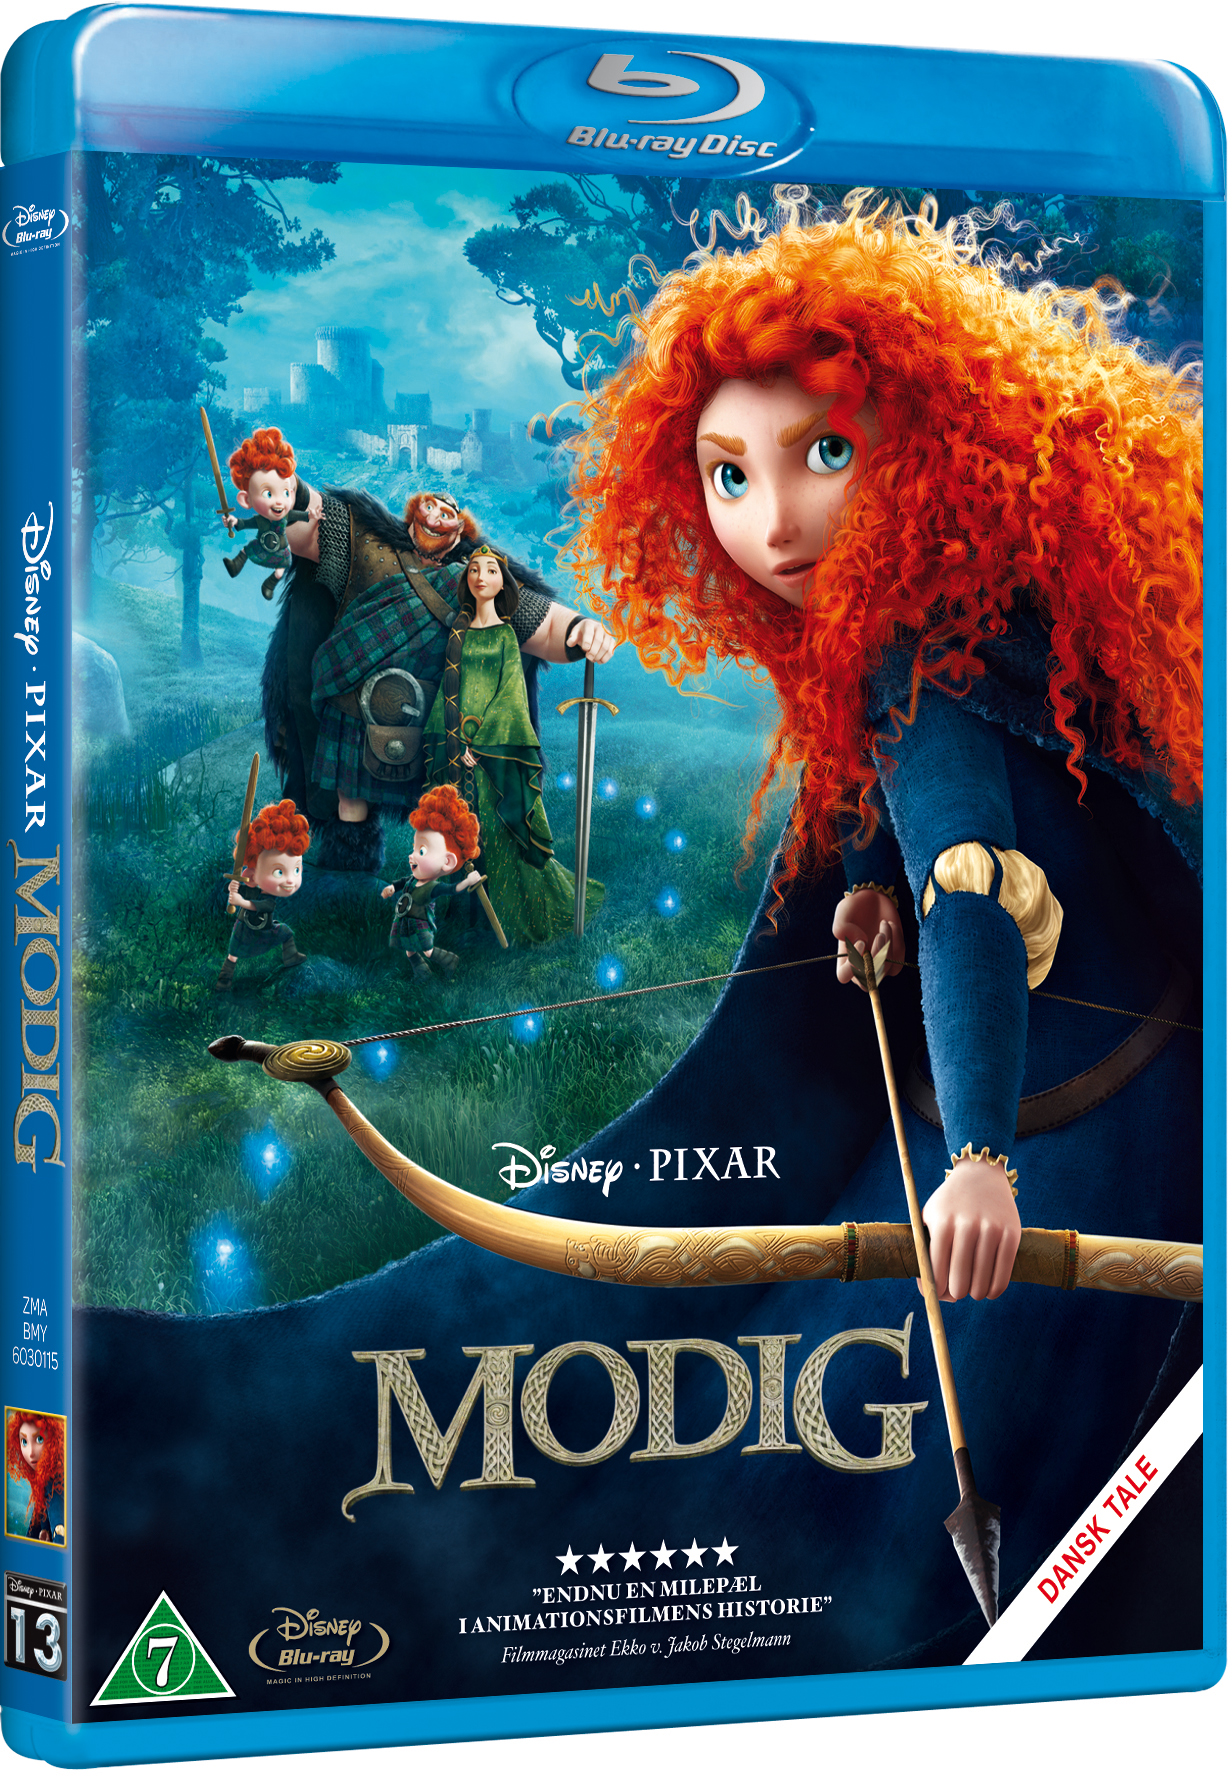 Disneys Modig / Brave (Blu-Ray)